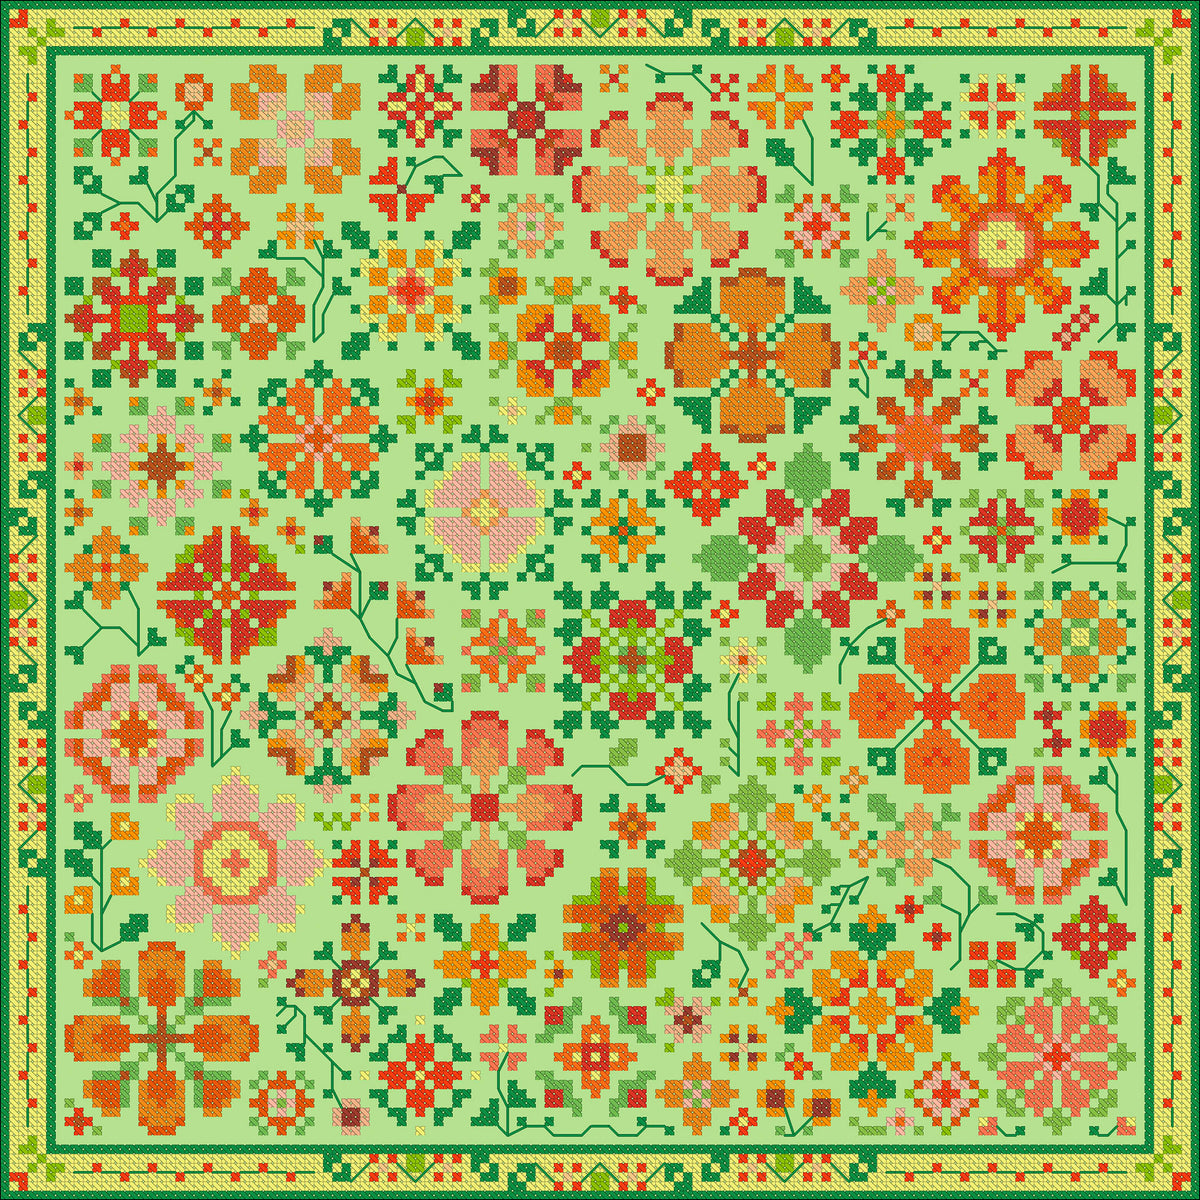 Flower-a-Day Cross Stitch Pattern - Orange